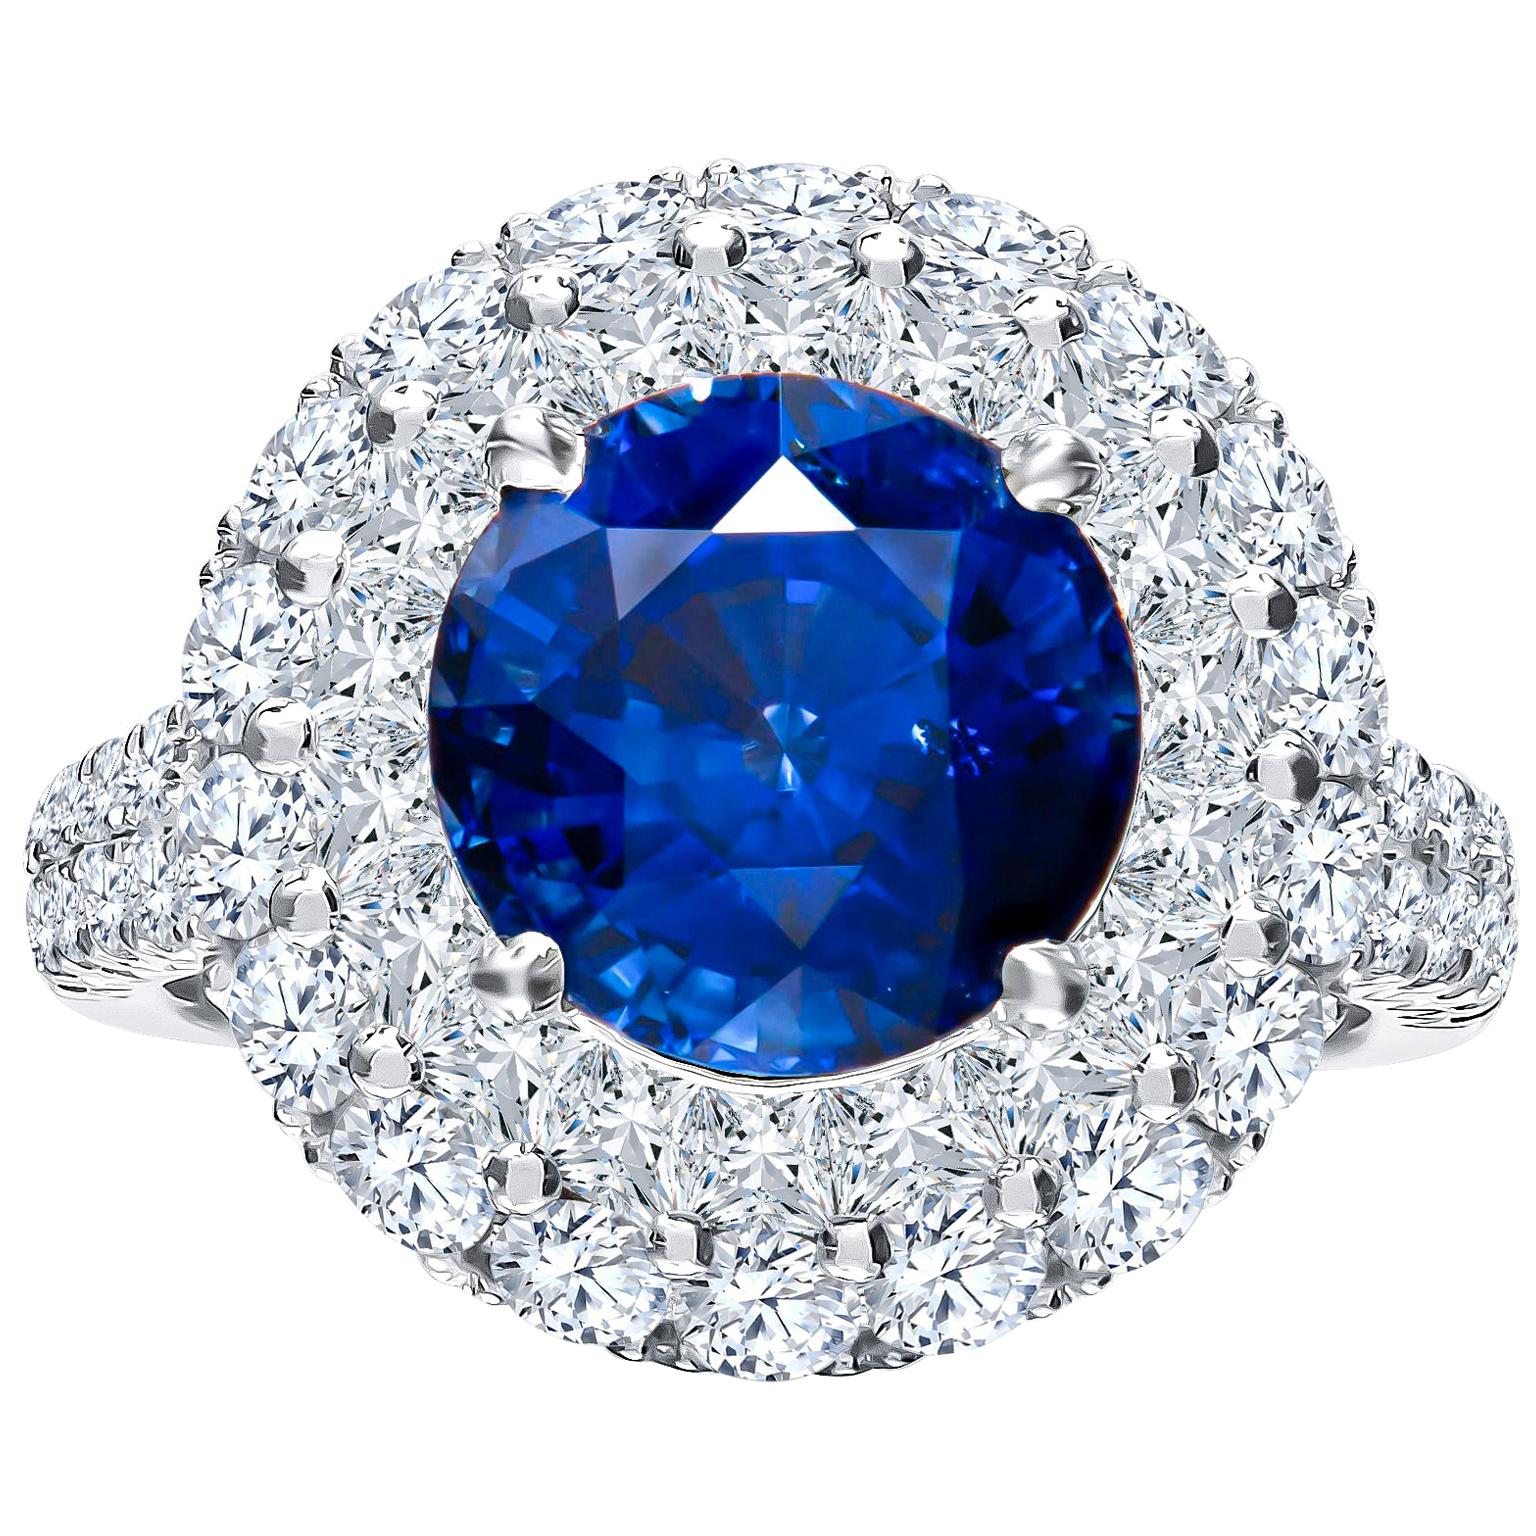 Bague en or 18 carats avec saphir bleu naturel rond de 5,00 carats et diamants de 2,63 carats au total